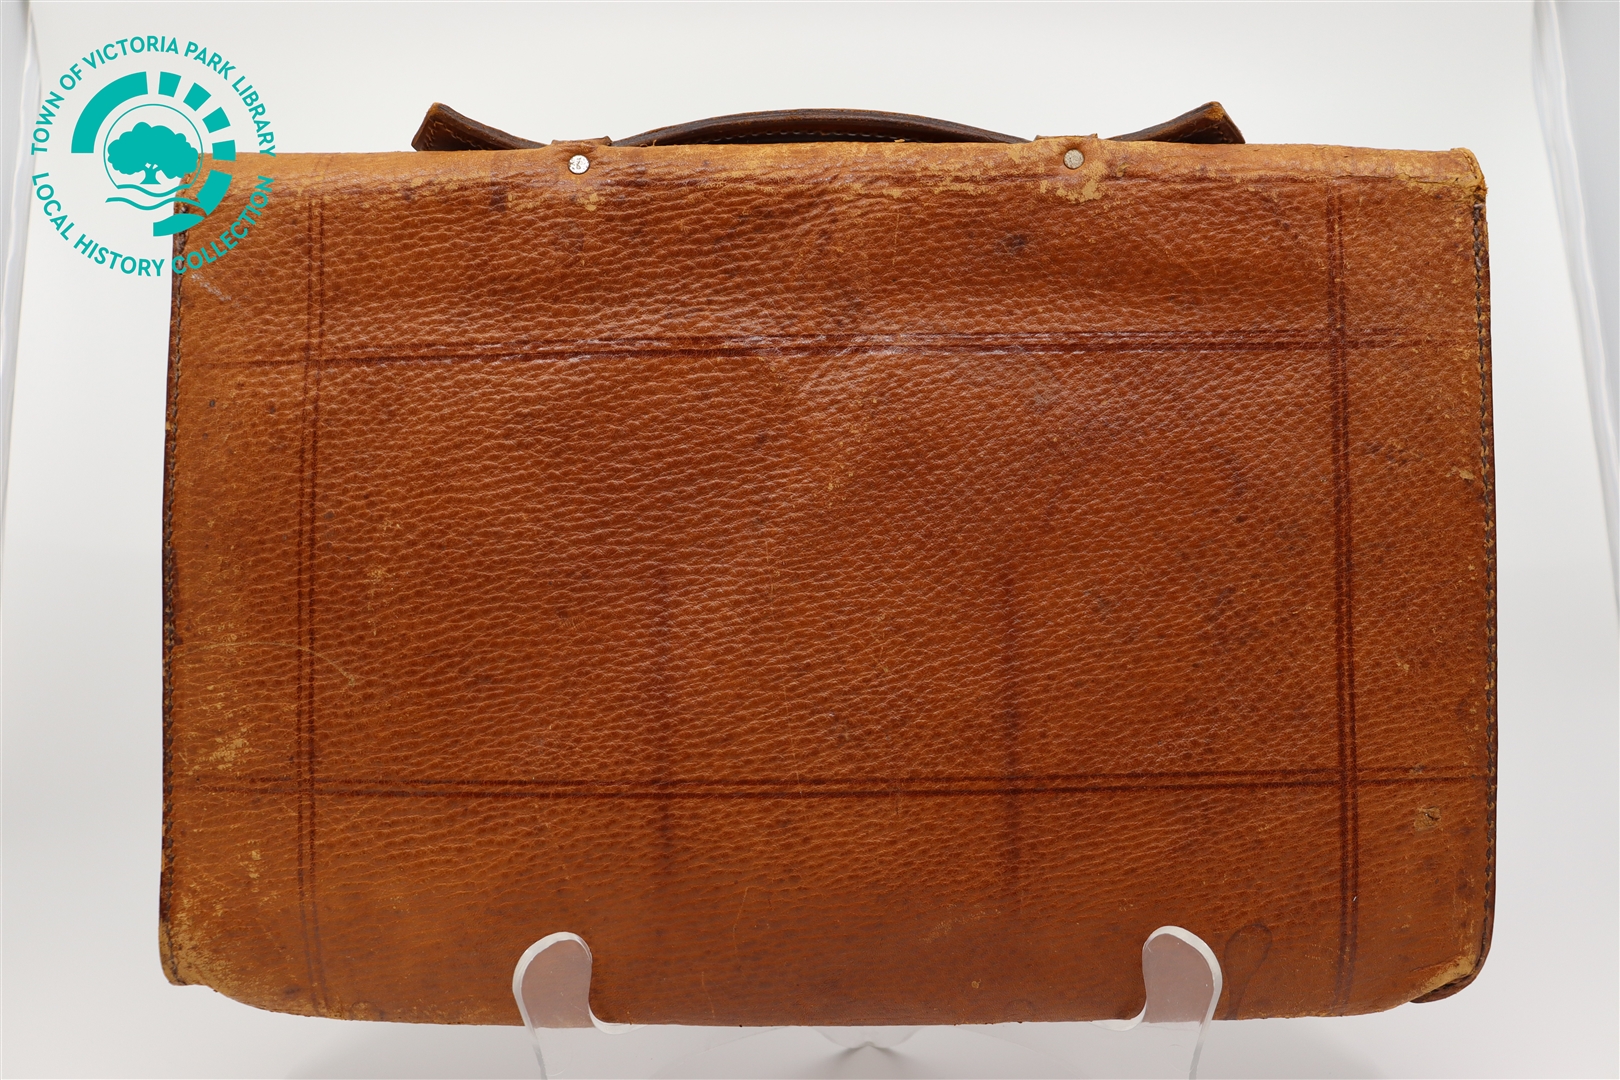 Back of Mr J. Treacy's leather satchel Image